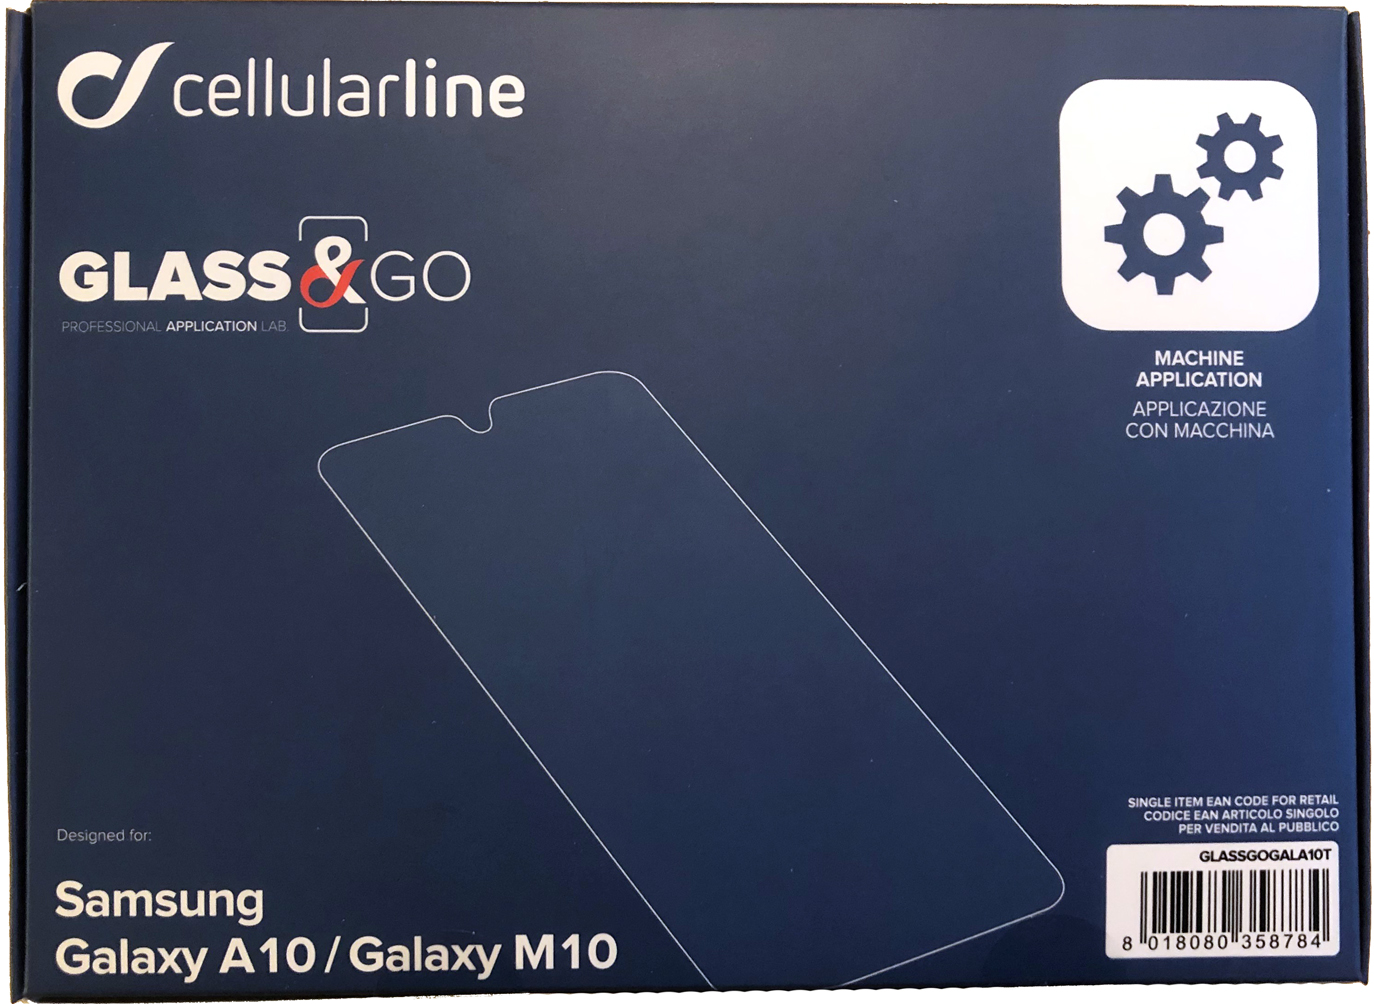 8018080358784 Cellularline Glass & Go - Galaxy A10 5 stk. - Skærmbeskyttel Telefon & GPS,Tilbehør mobiltelefoner,Skærmbeskyttelse til mobiltelefoner 17300001020 102848